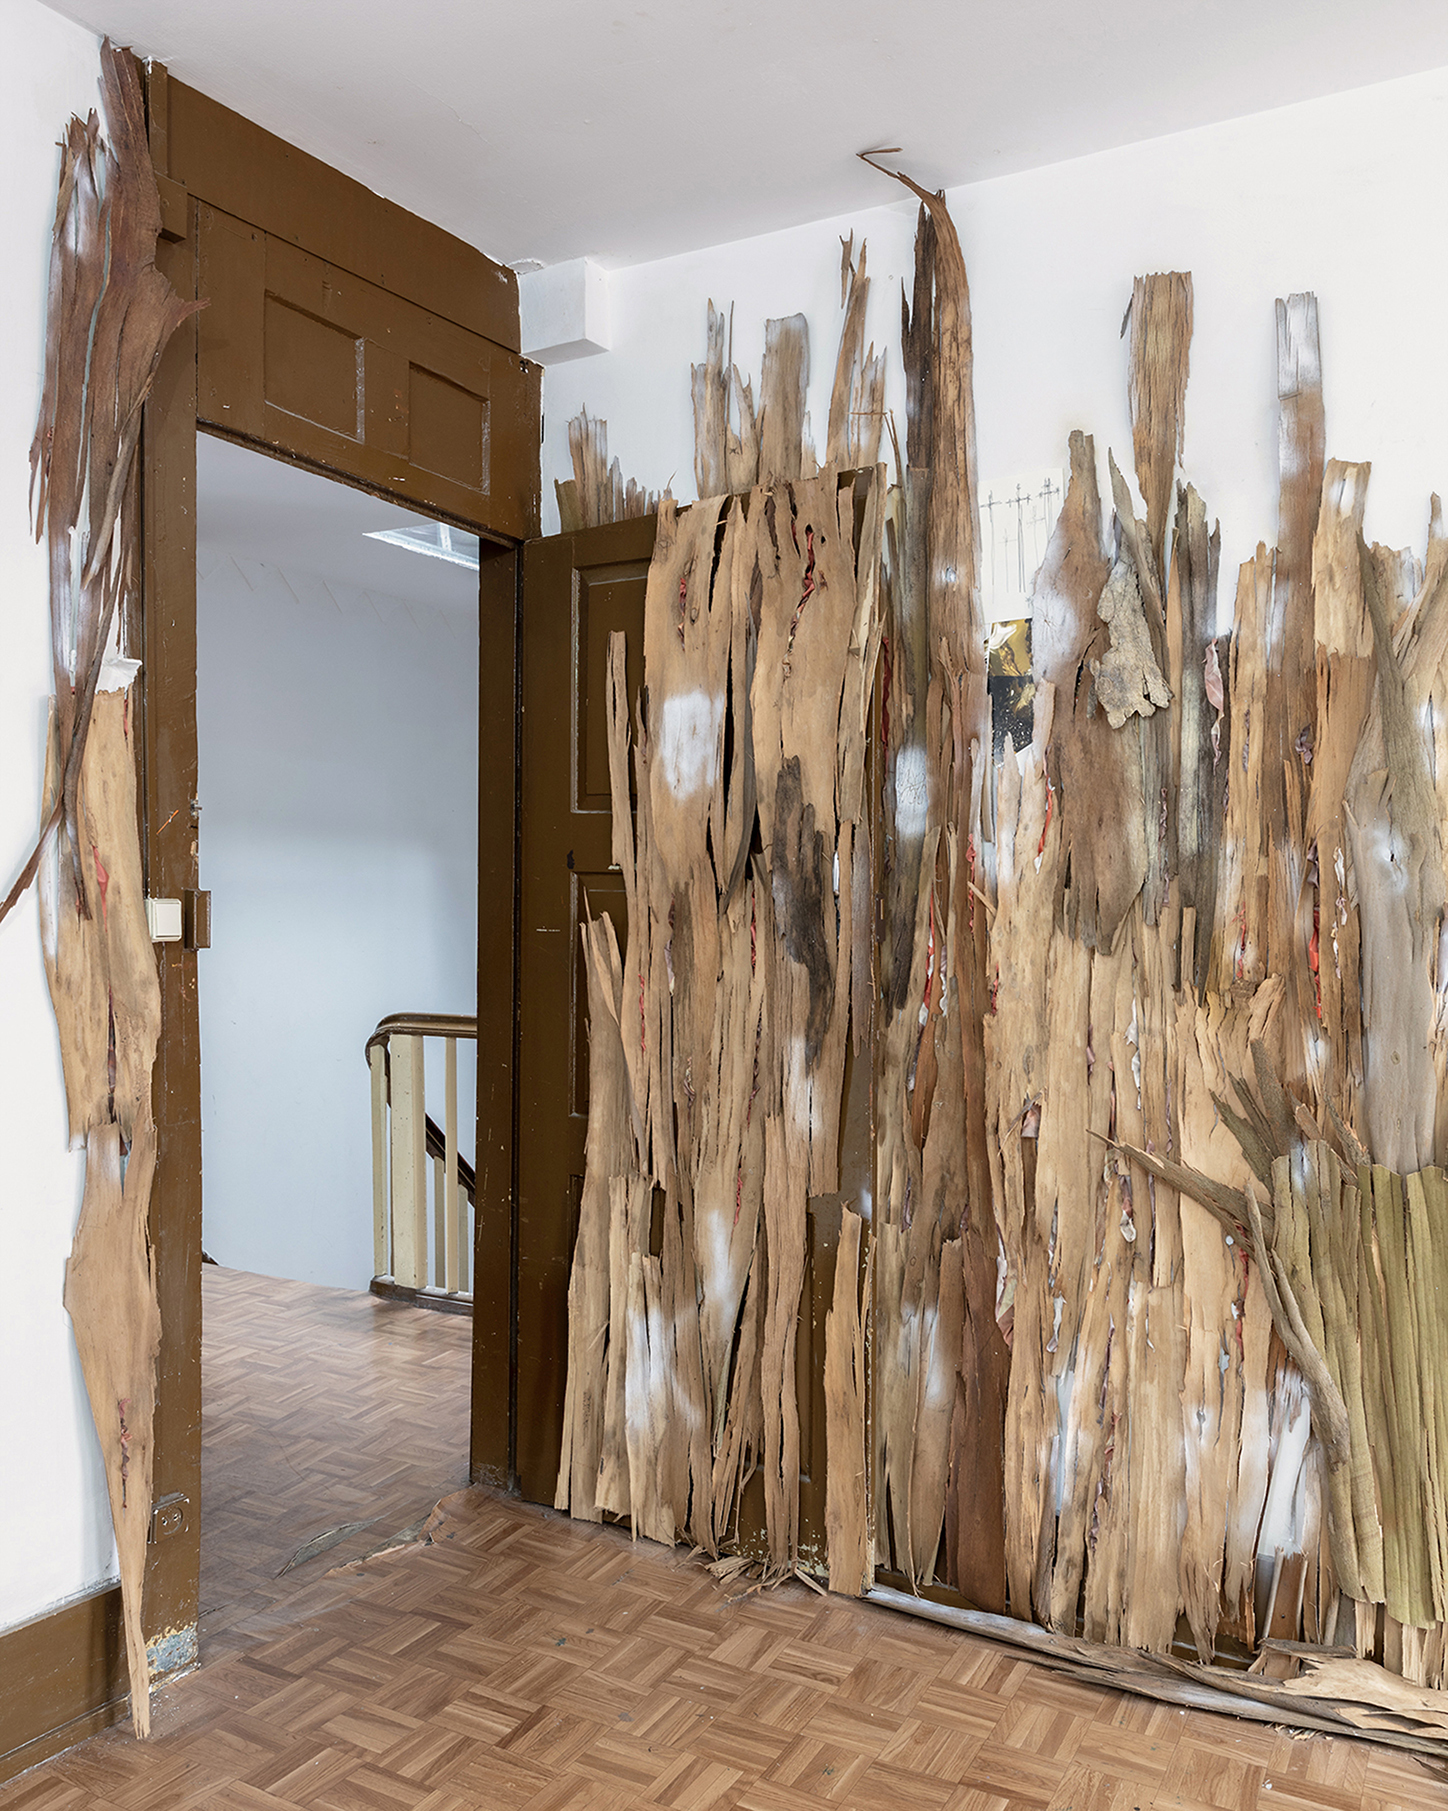 Olan Monk, Luiza Leitão, Klára Švandová, Ondřej Doskočil. Medium: installation, photos, drawing, recycled materials - wood, banner